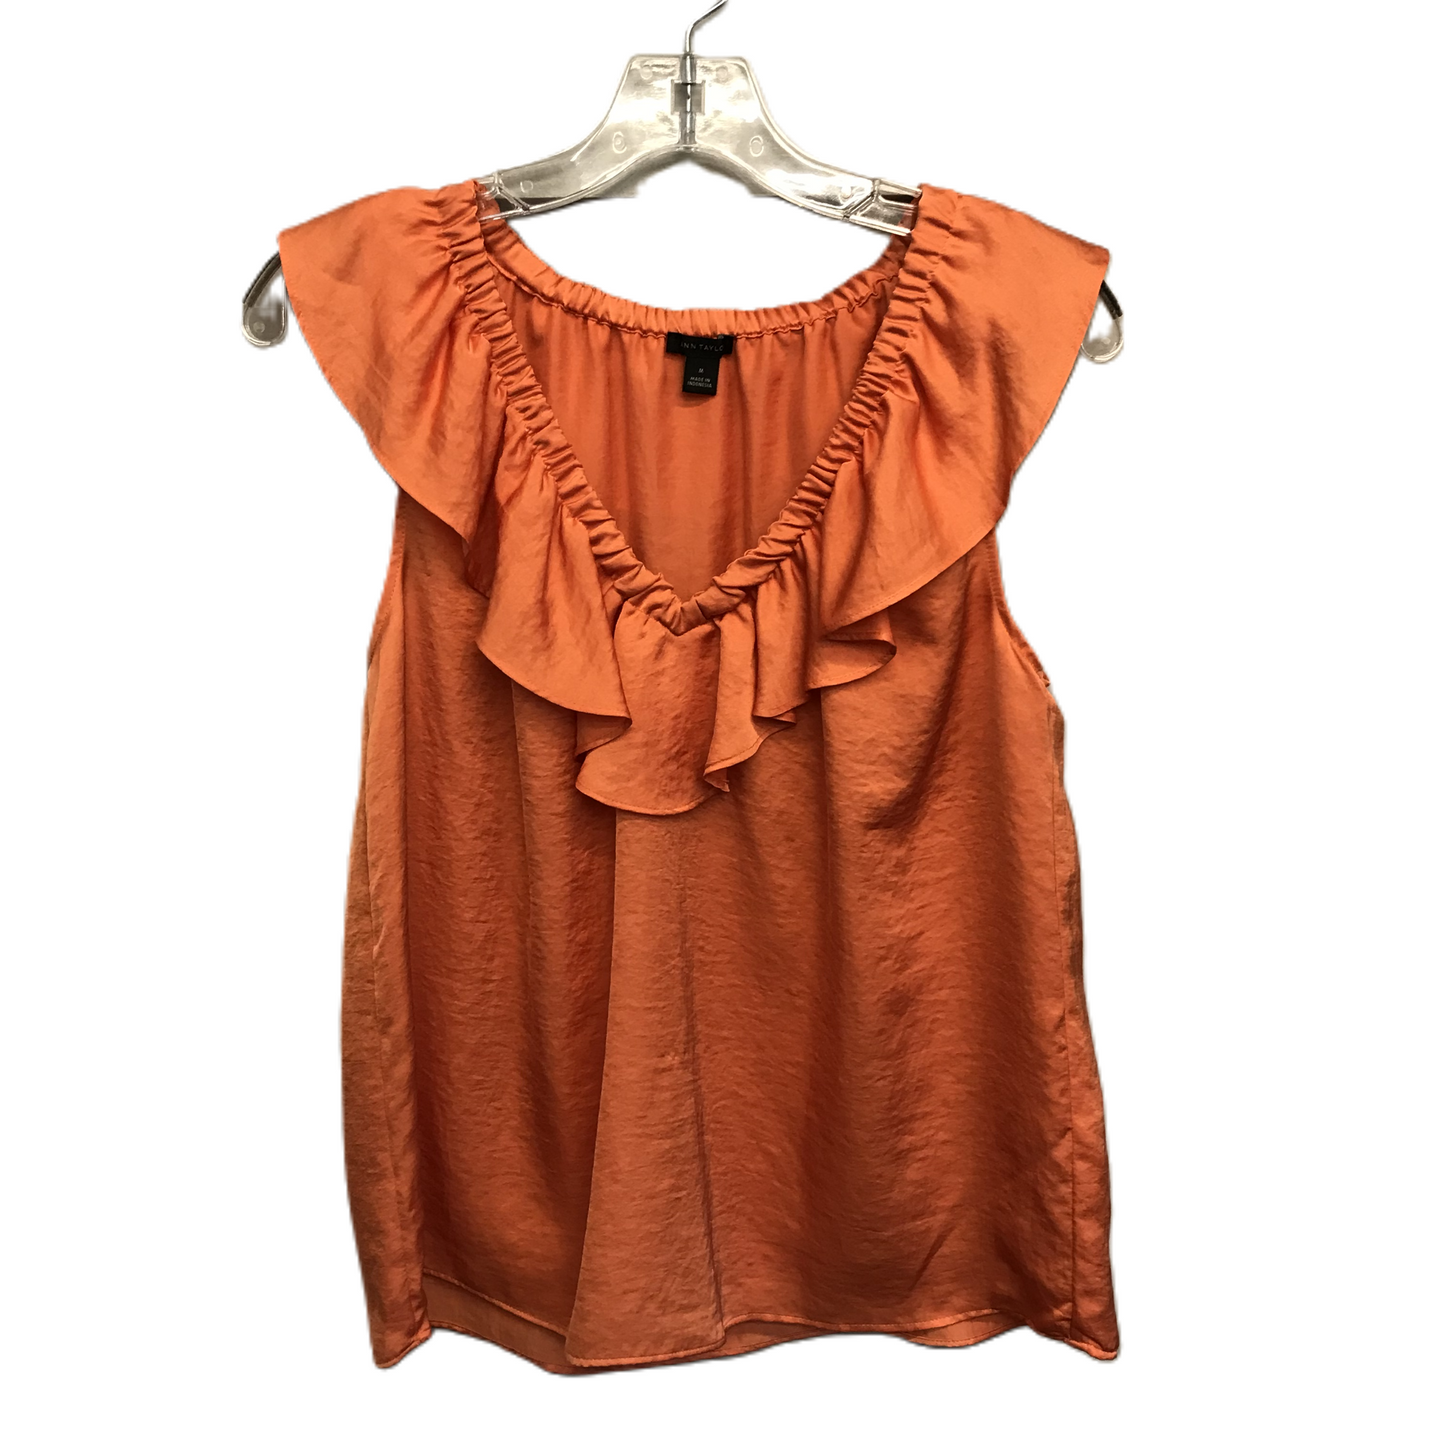 Orange Top Sleeveless By Ann Taylor, Size: M